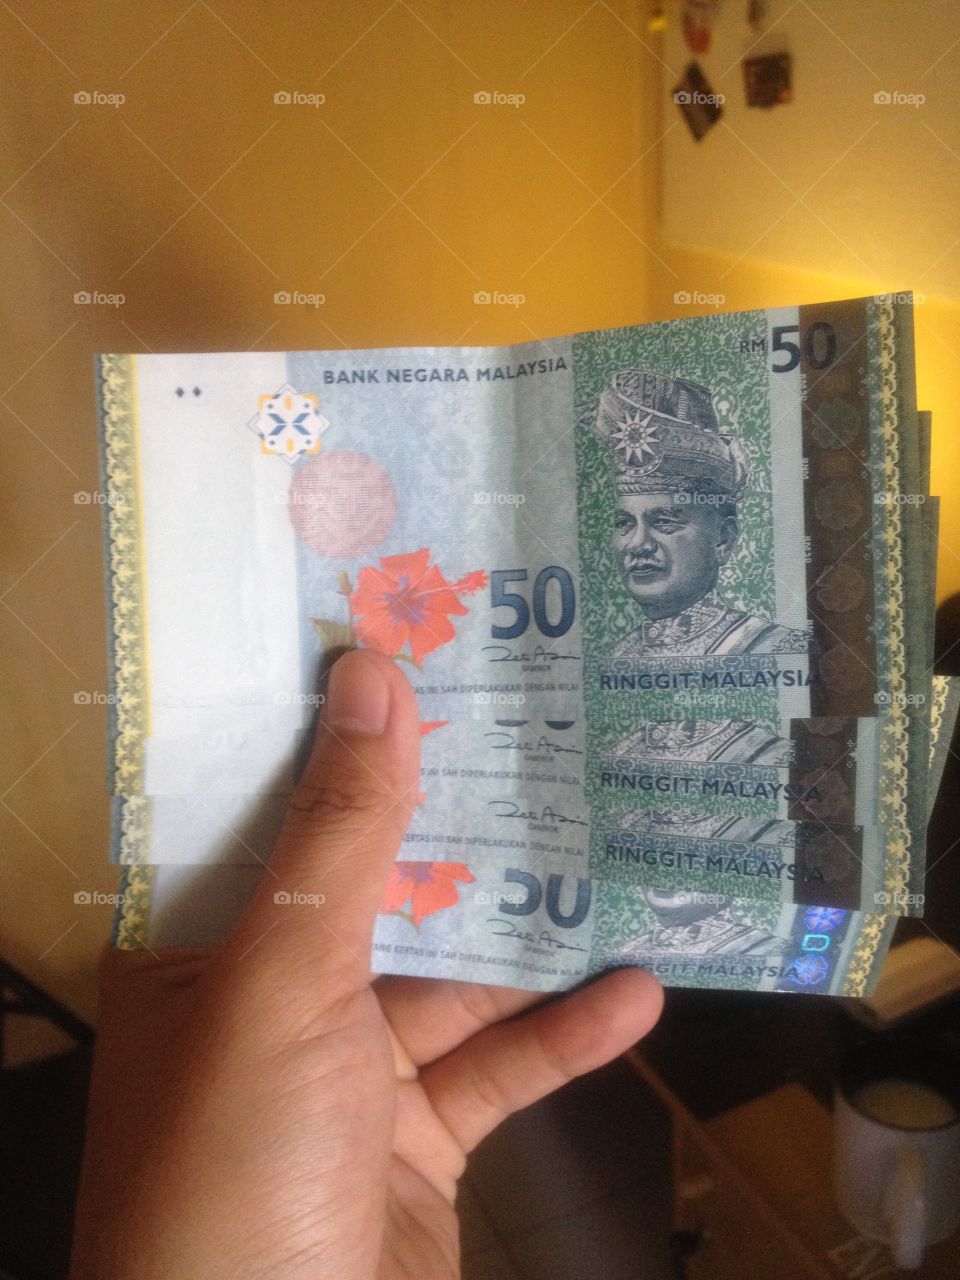 Ringgit
Money
Malaysian money
50 ringgit